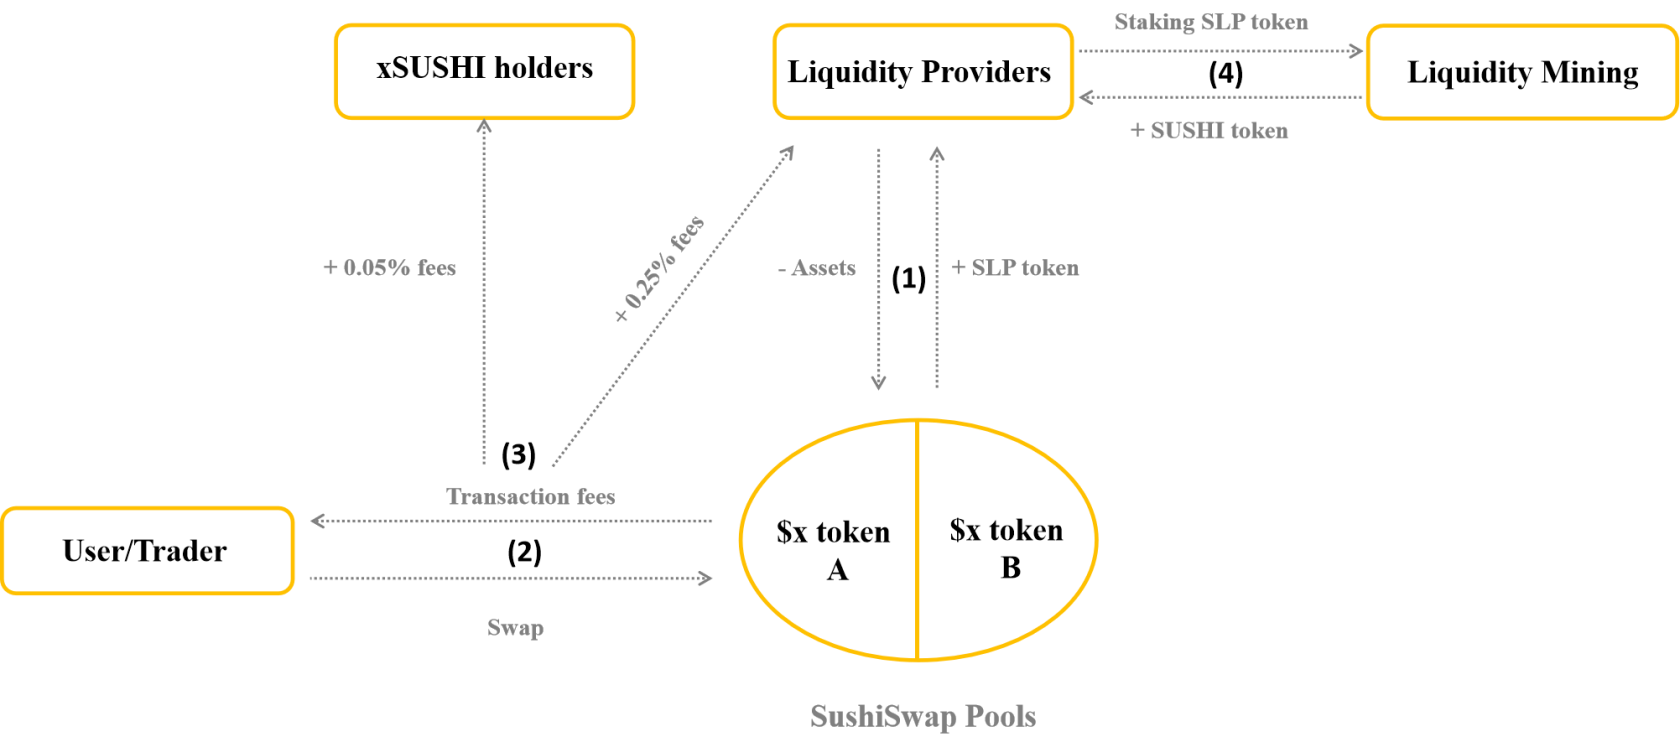 Análisis del modelo operativo SushiSwap – Modelo multiproducto